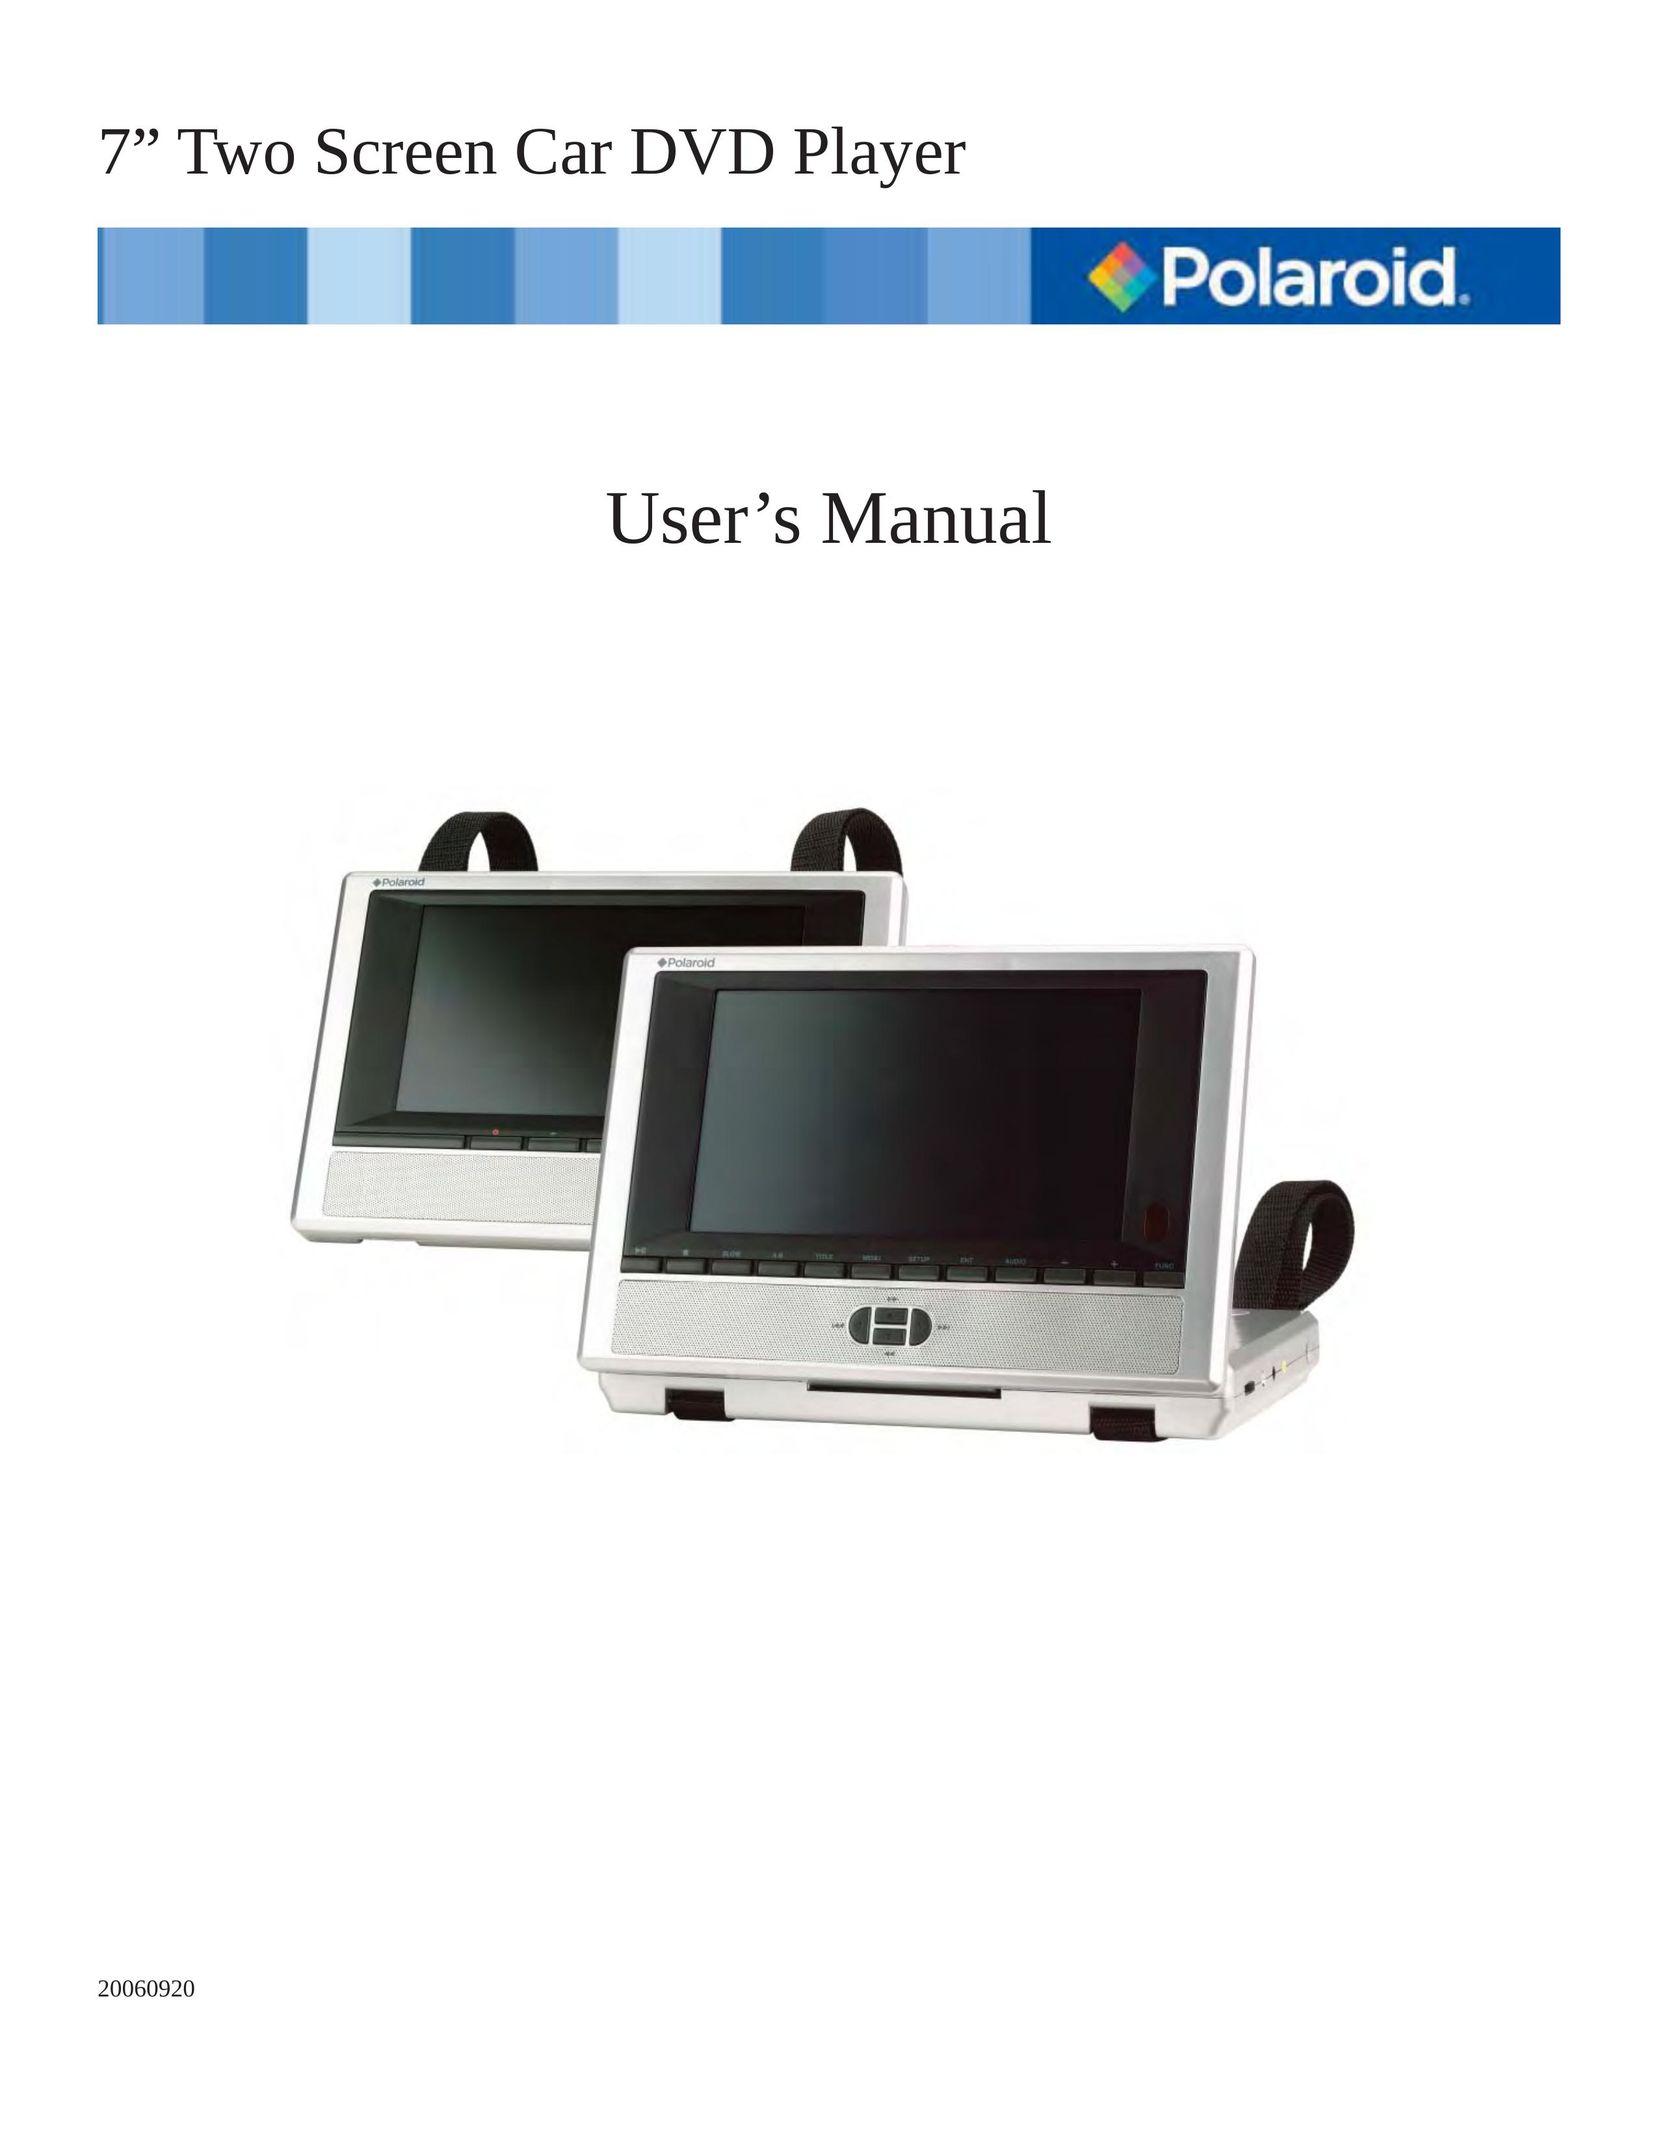 Polaroid Overhead DVD Player Car Video System User Manual